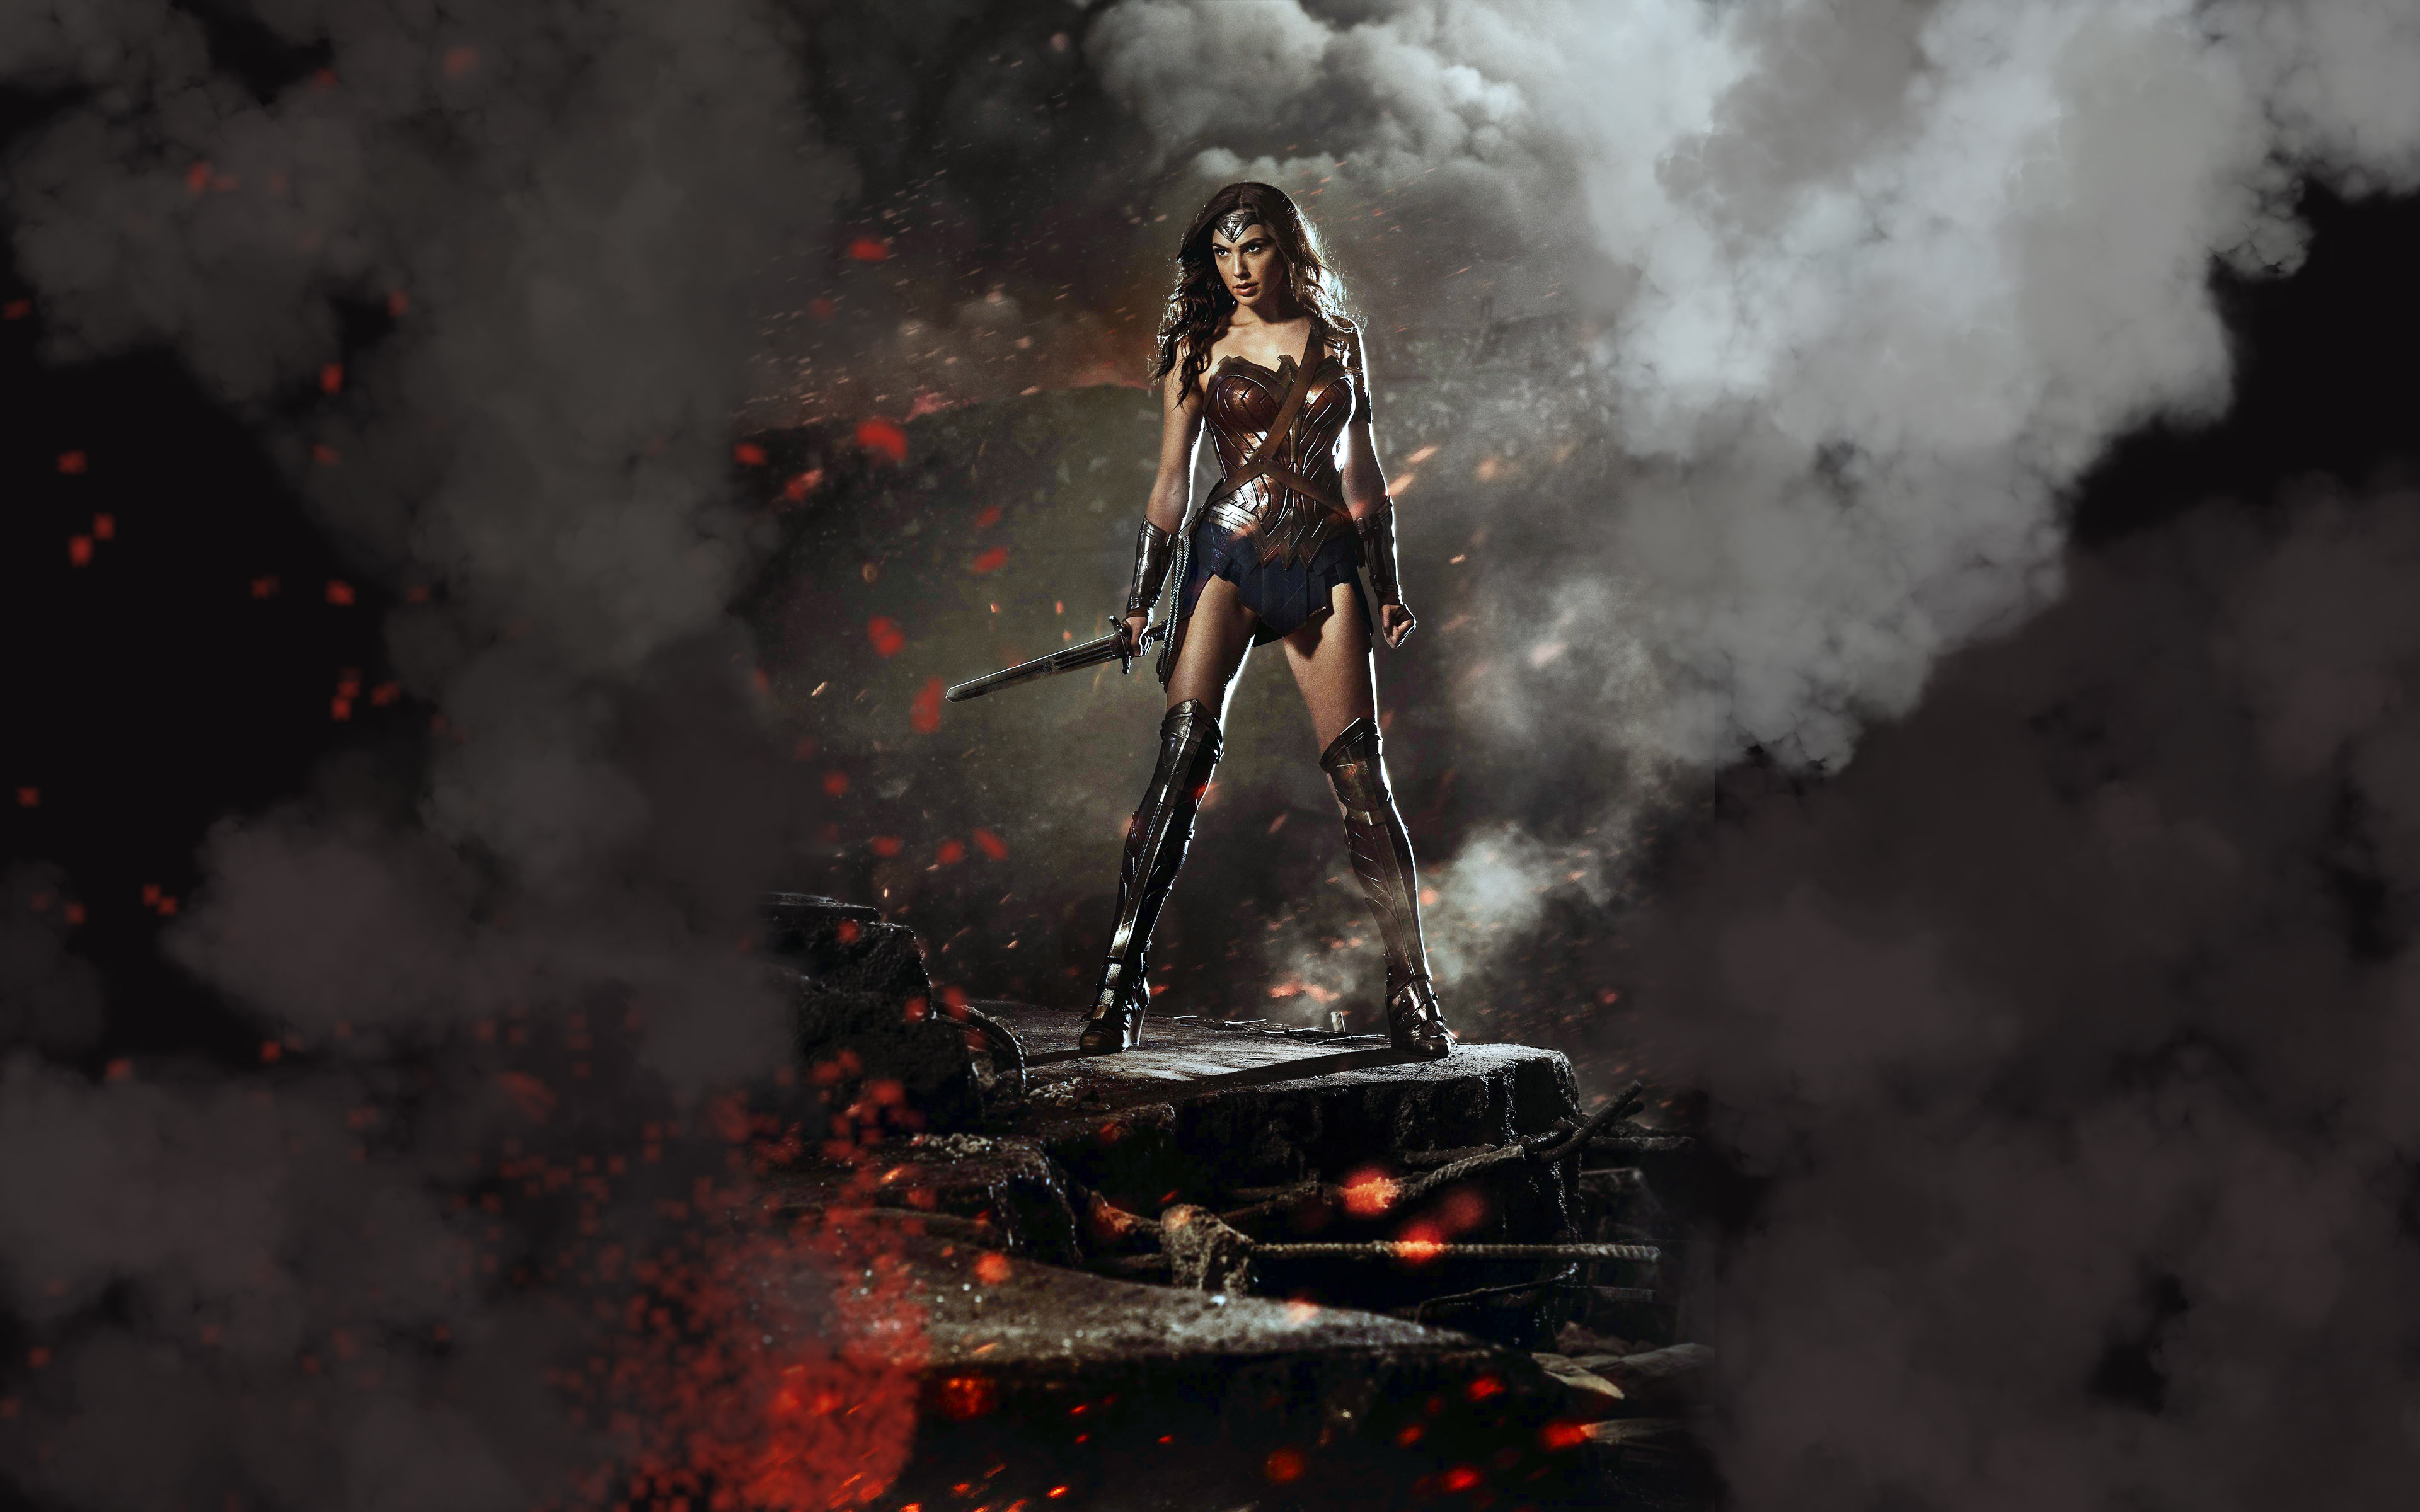 New Wonder Woman Movie Wallpapers